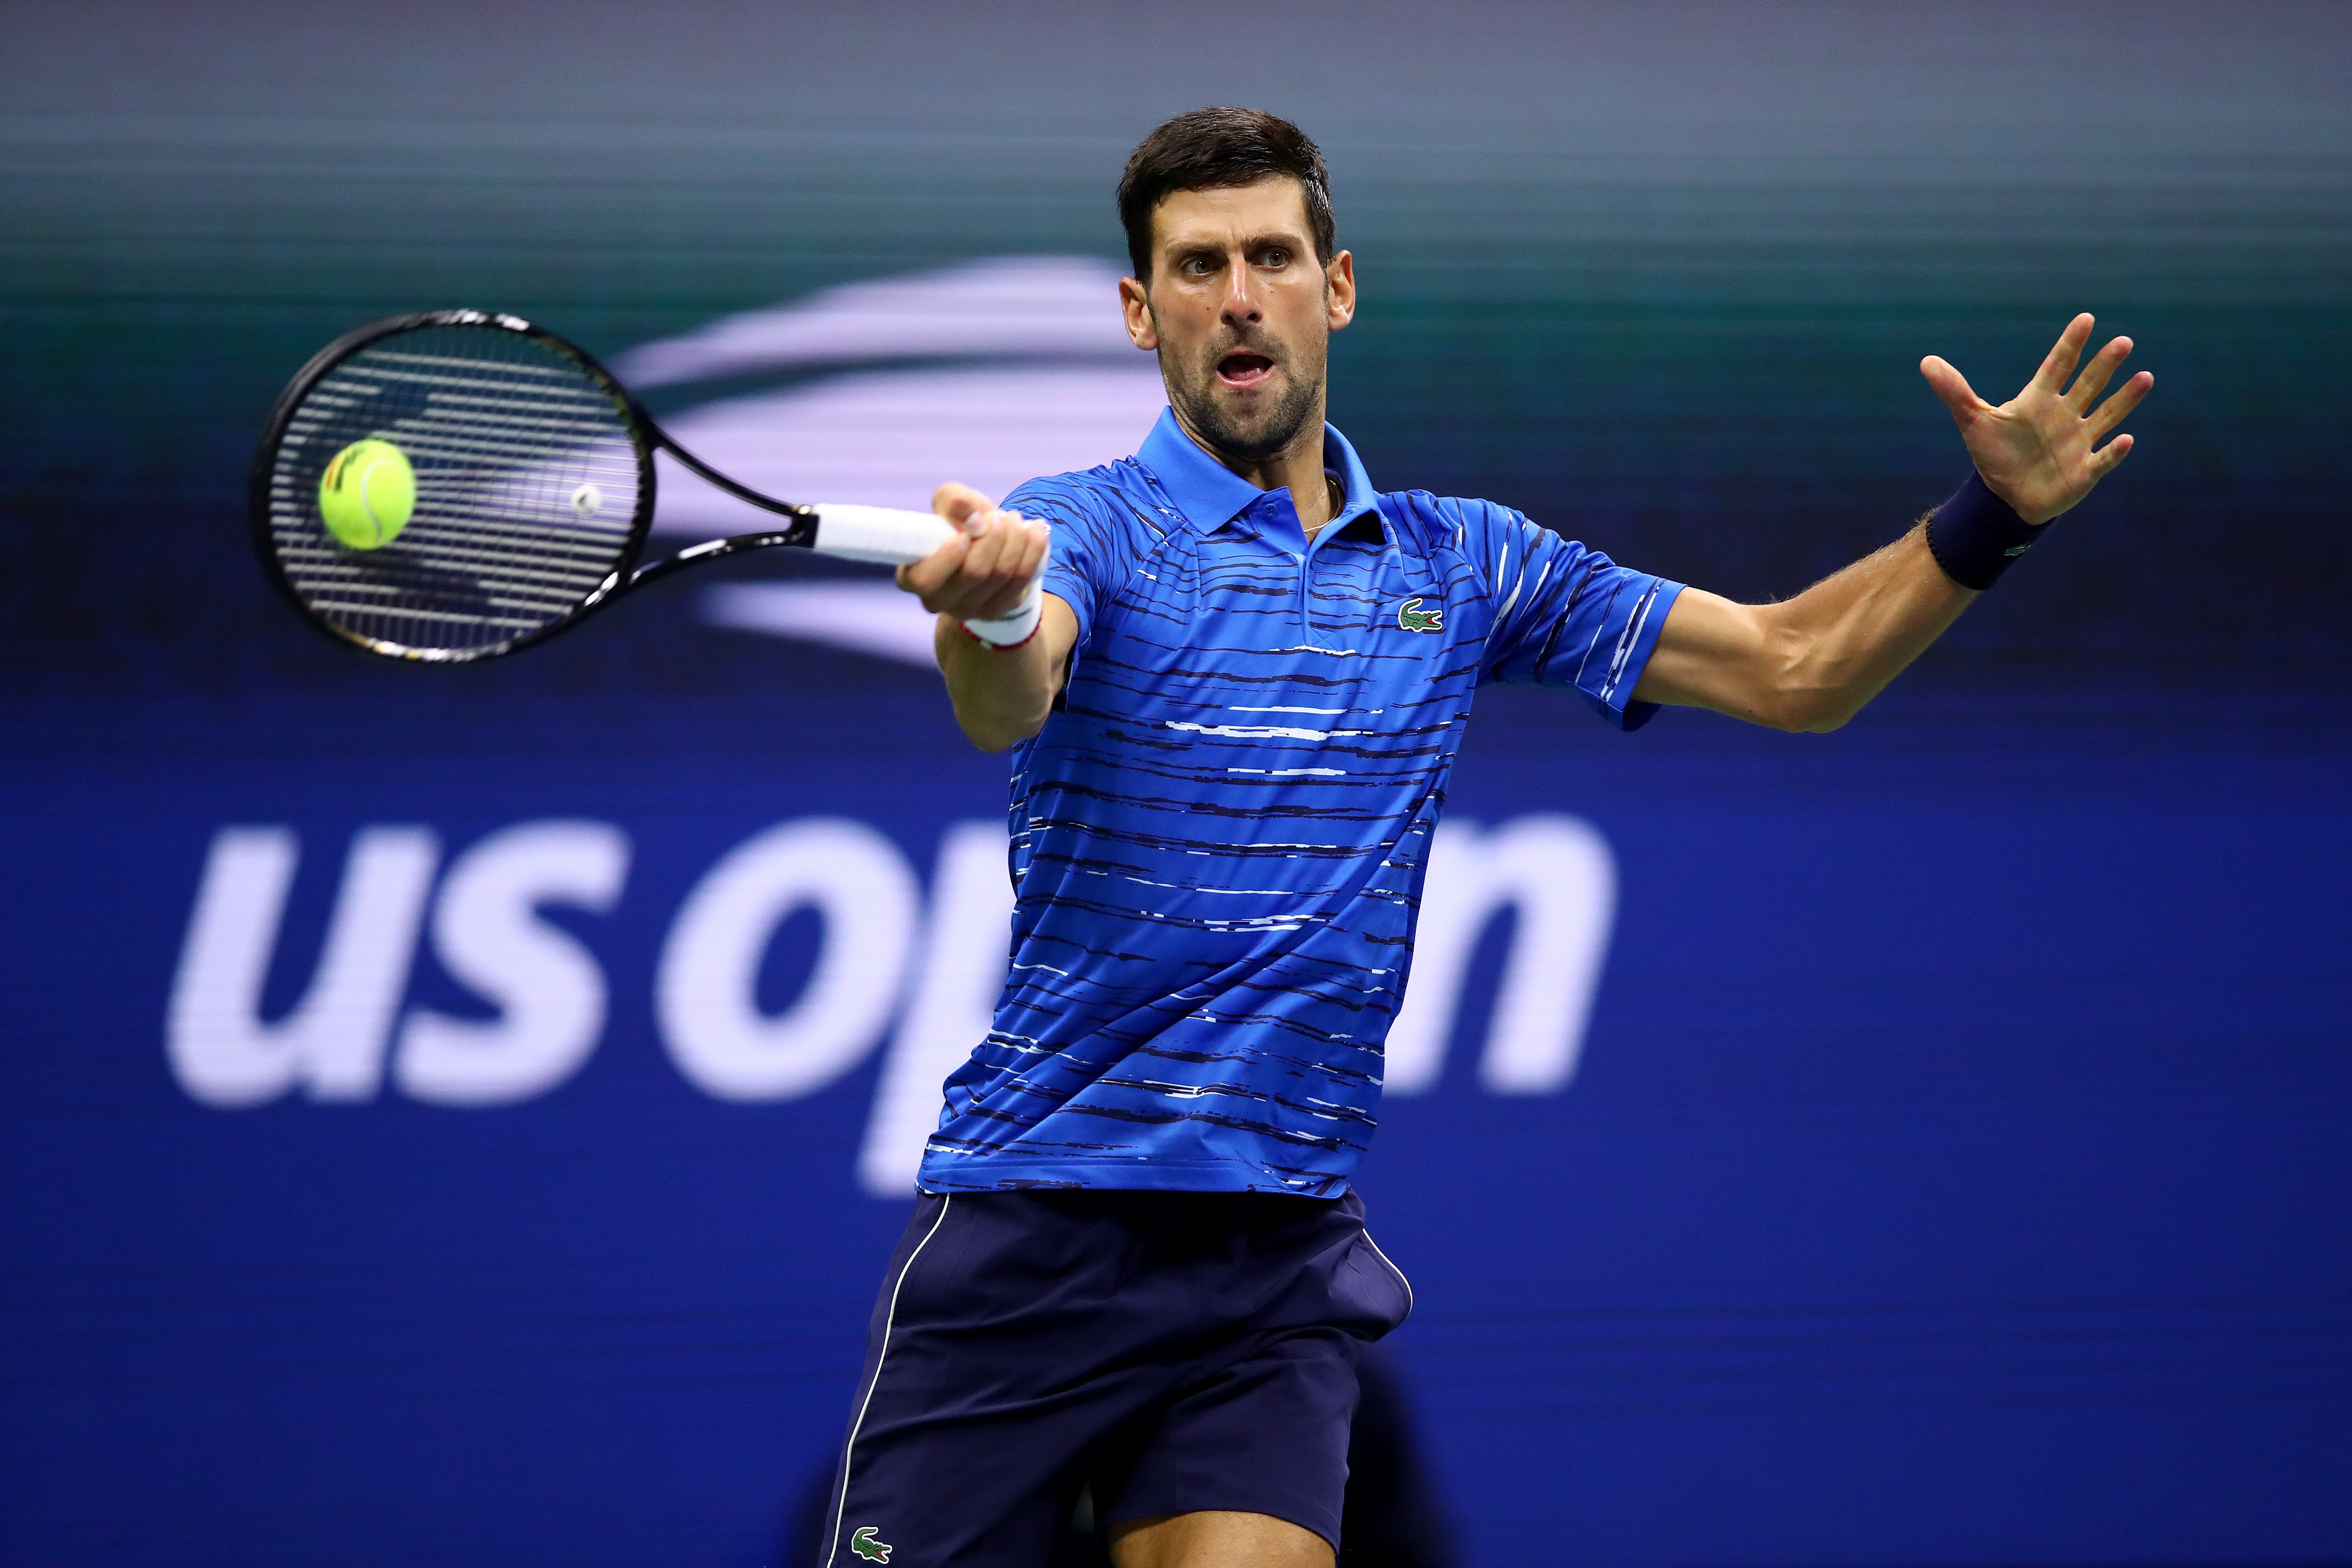 Novak Djokovic Defaults from US Open after He Accidentally Struck Line